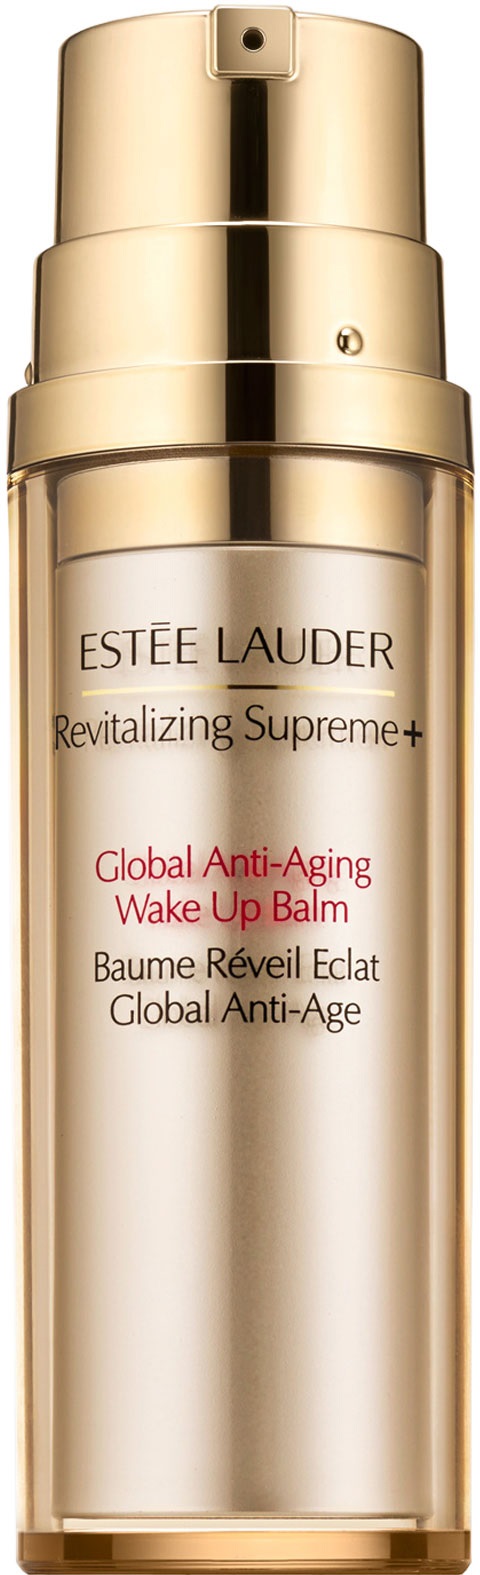 Revitalizing Supreme + Global Anti-Aging Wake Up Balm | Estee Lauder Hungary E-commerce Site